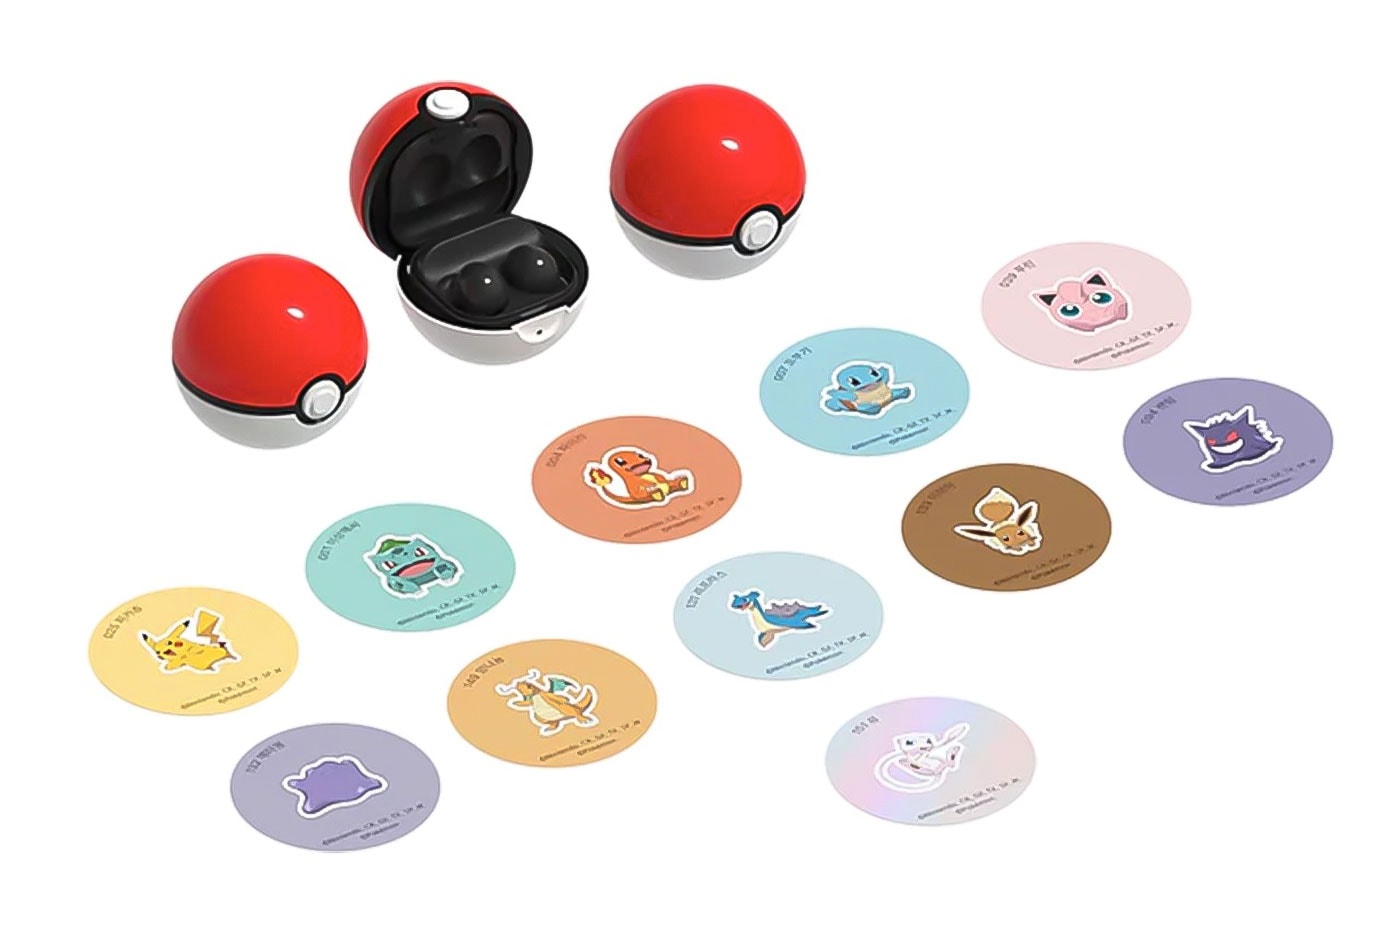 3.5 Pokémon Poké Ball Icon Symbol Vinyl Decal Art for Cars